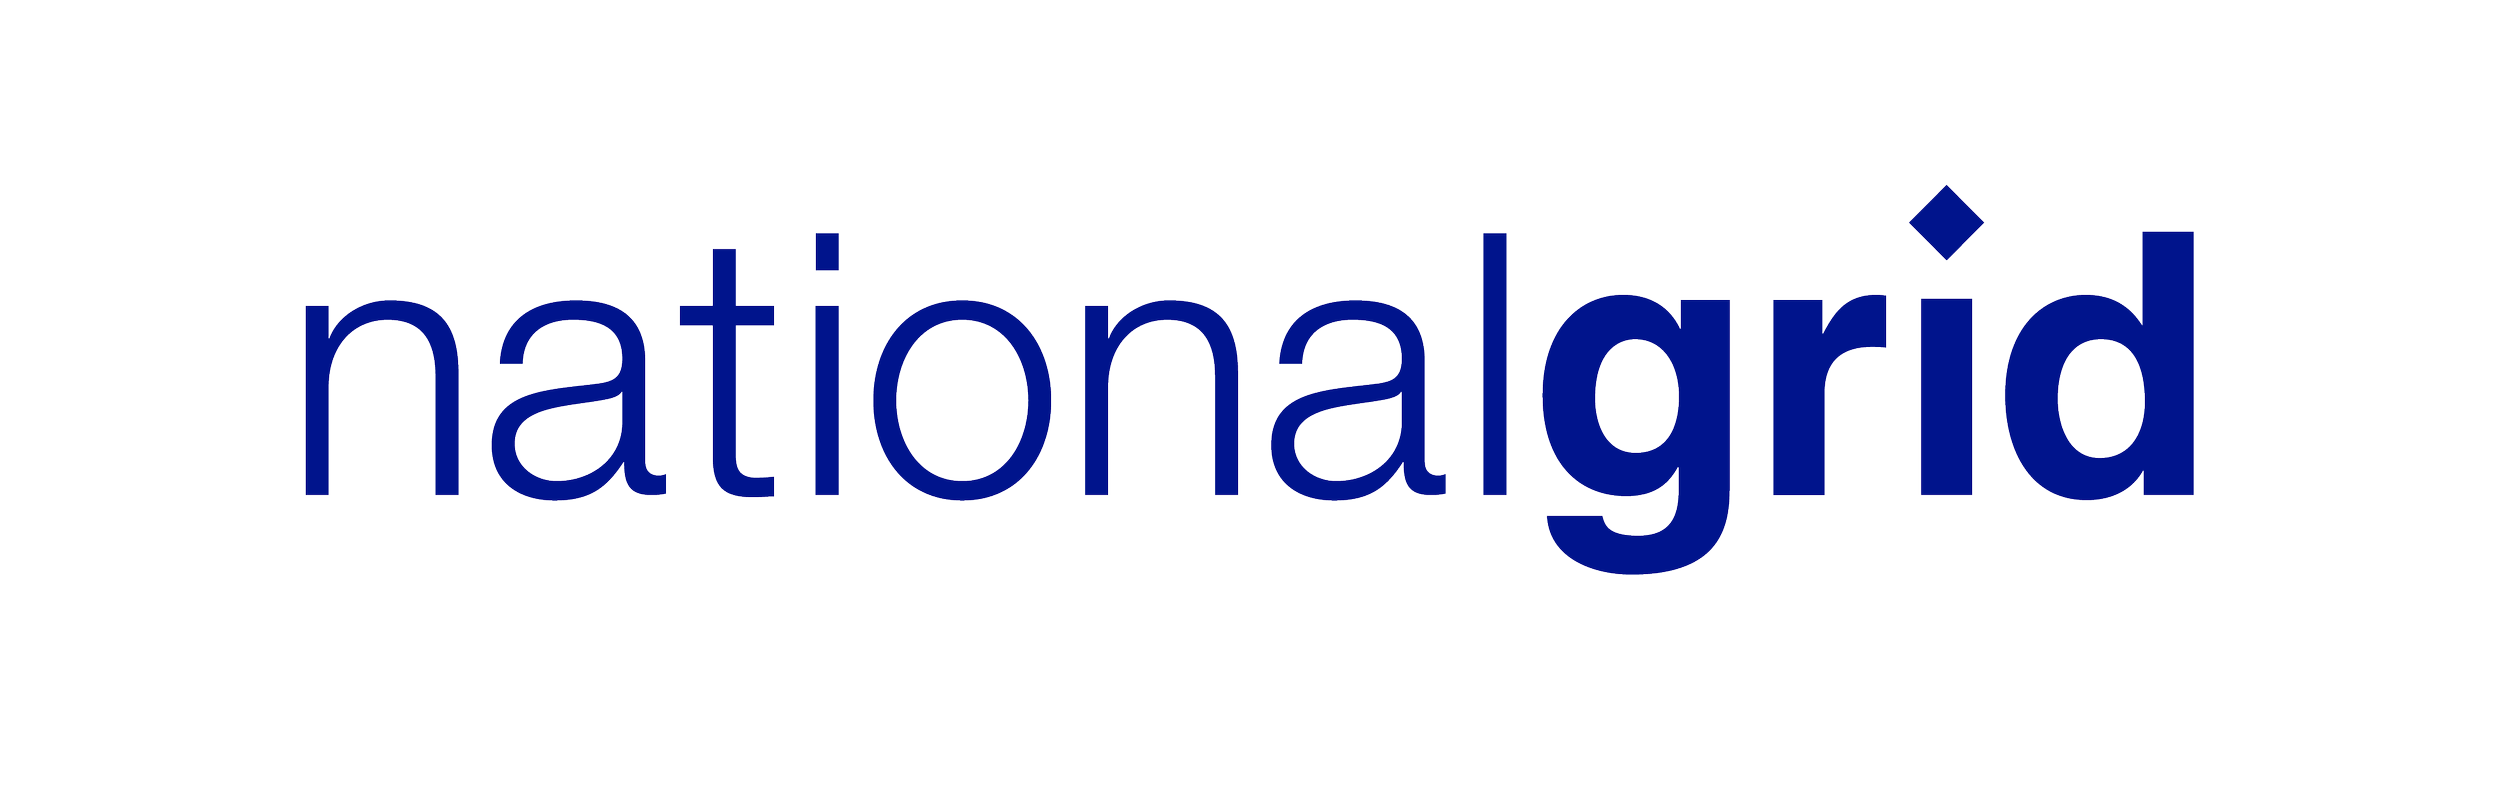 National_Grid_Logo_RGB.png